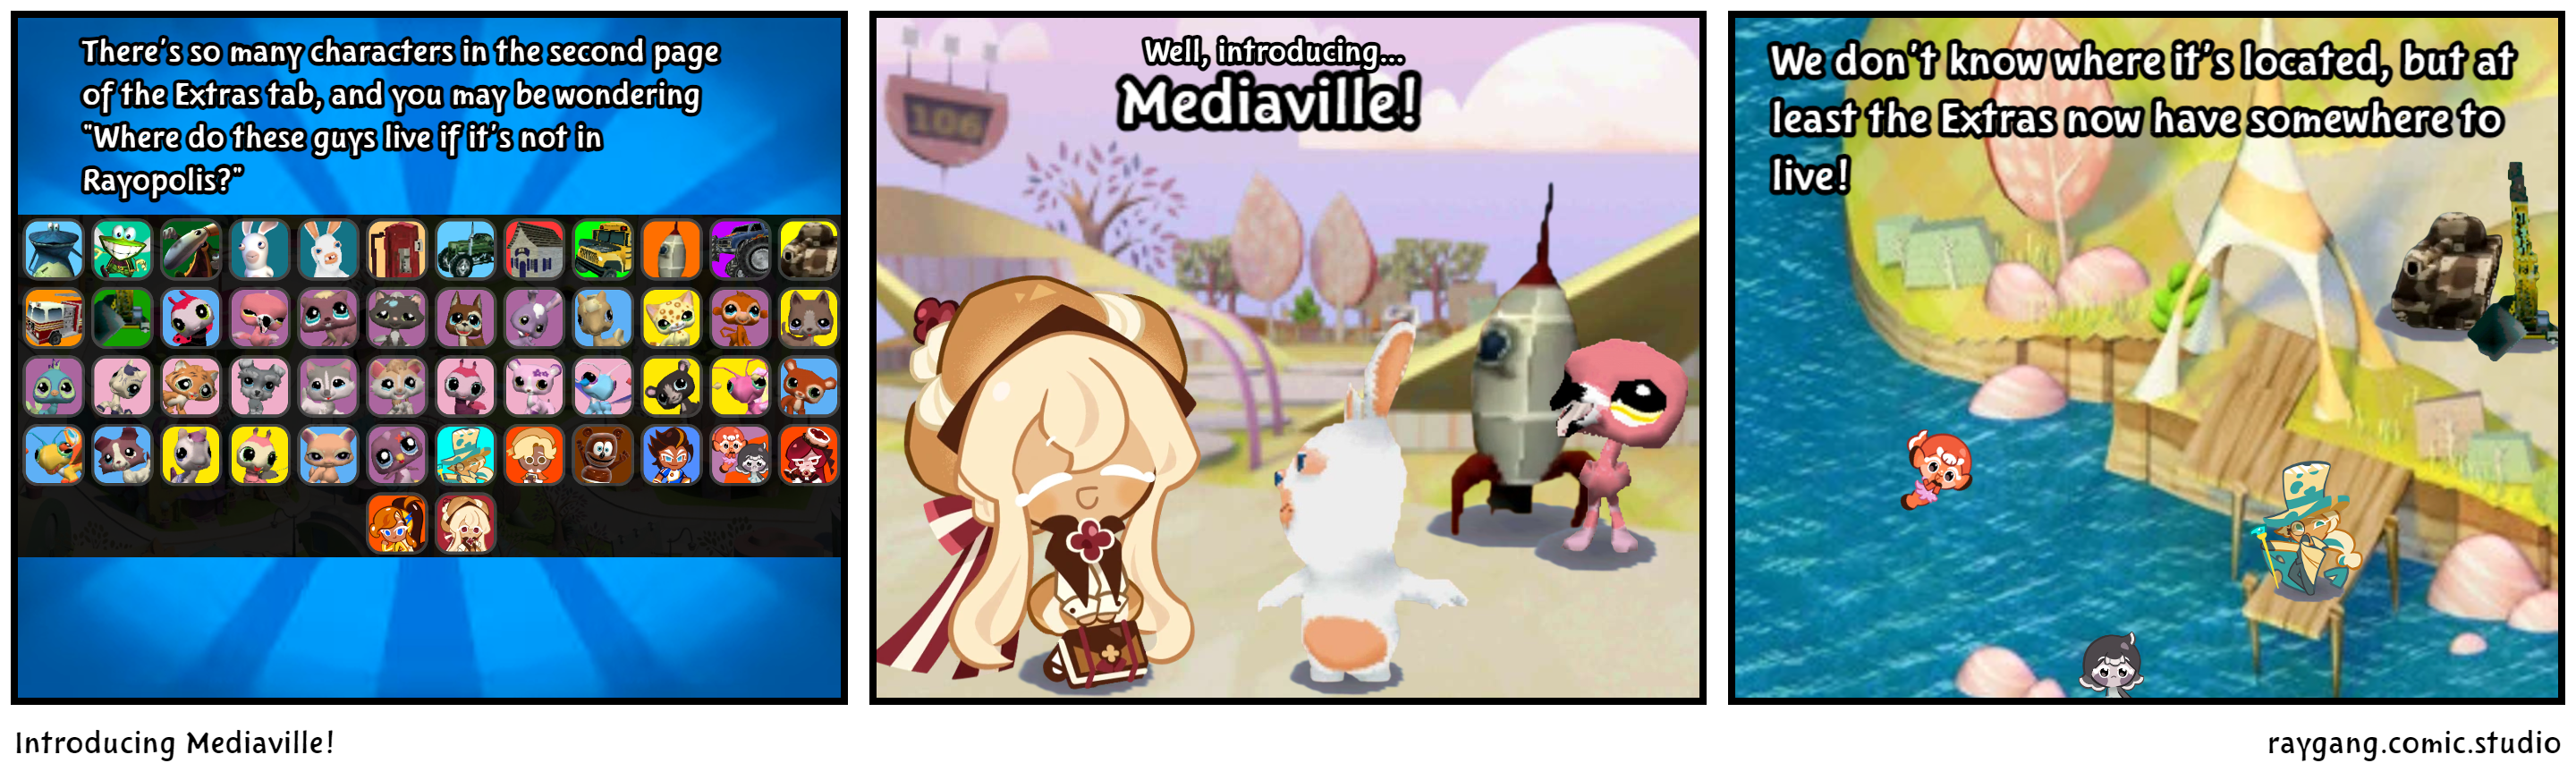 Introducing Mediaville!